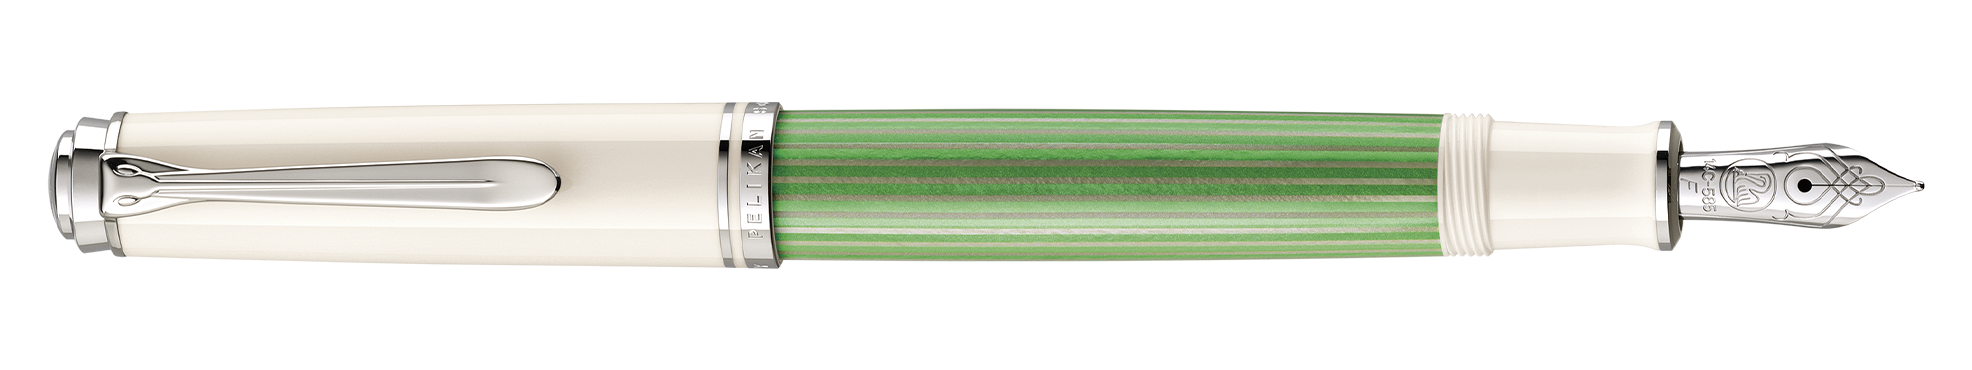 Souverän® 605 Grün-Weiß